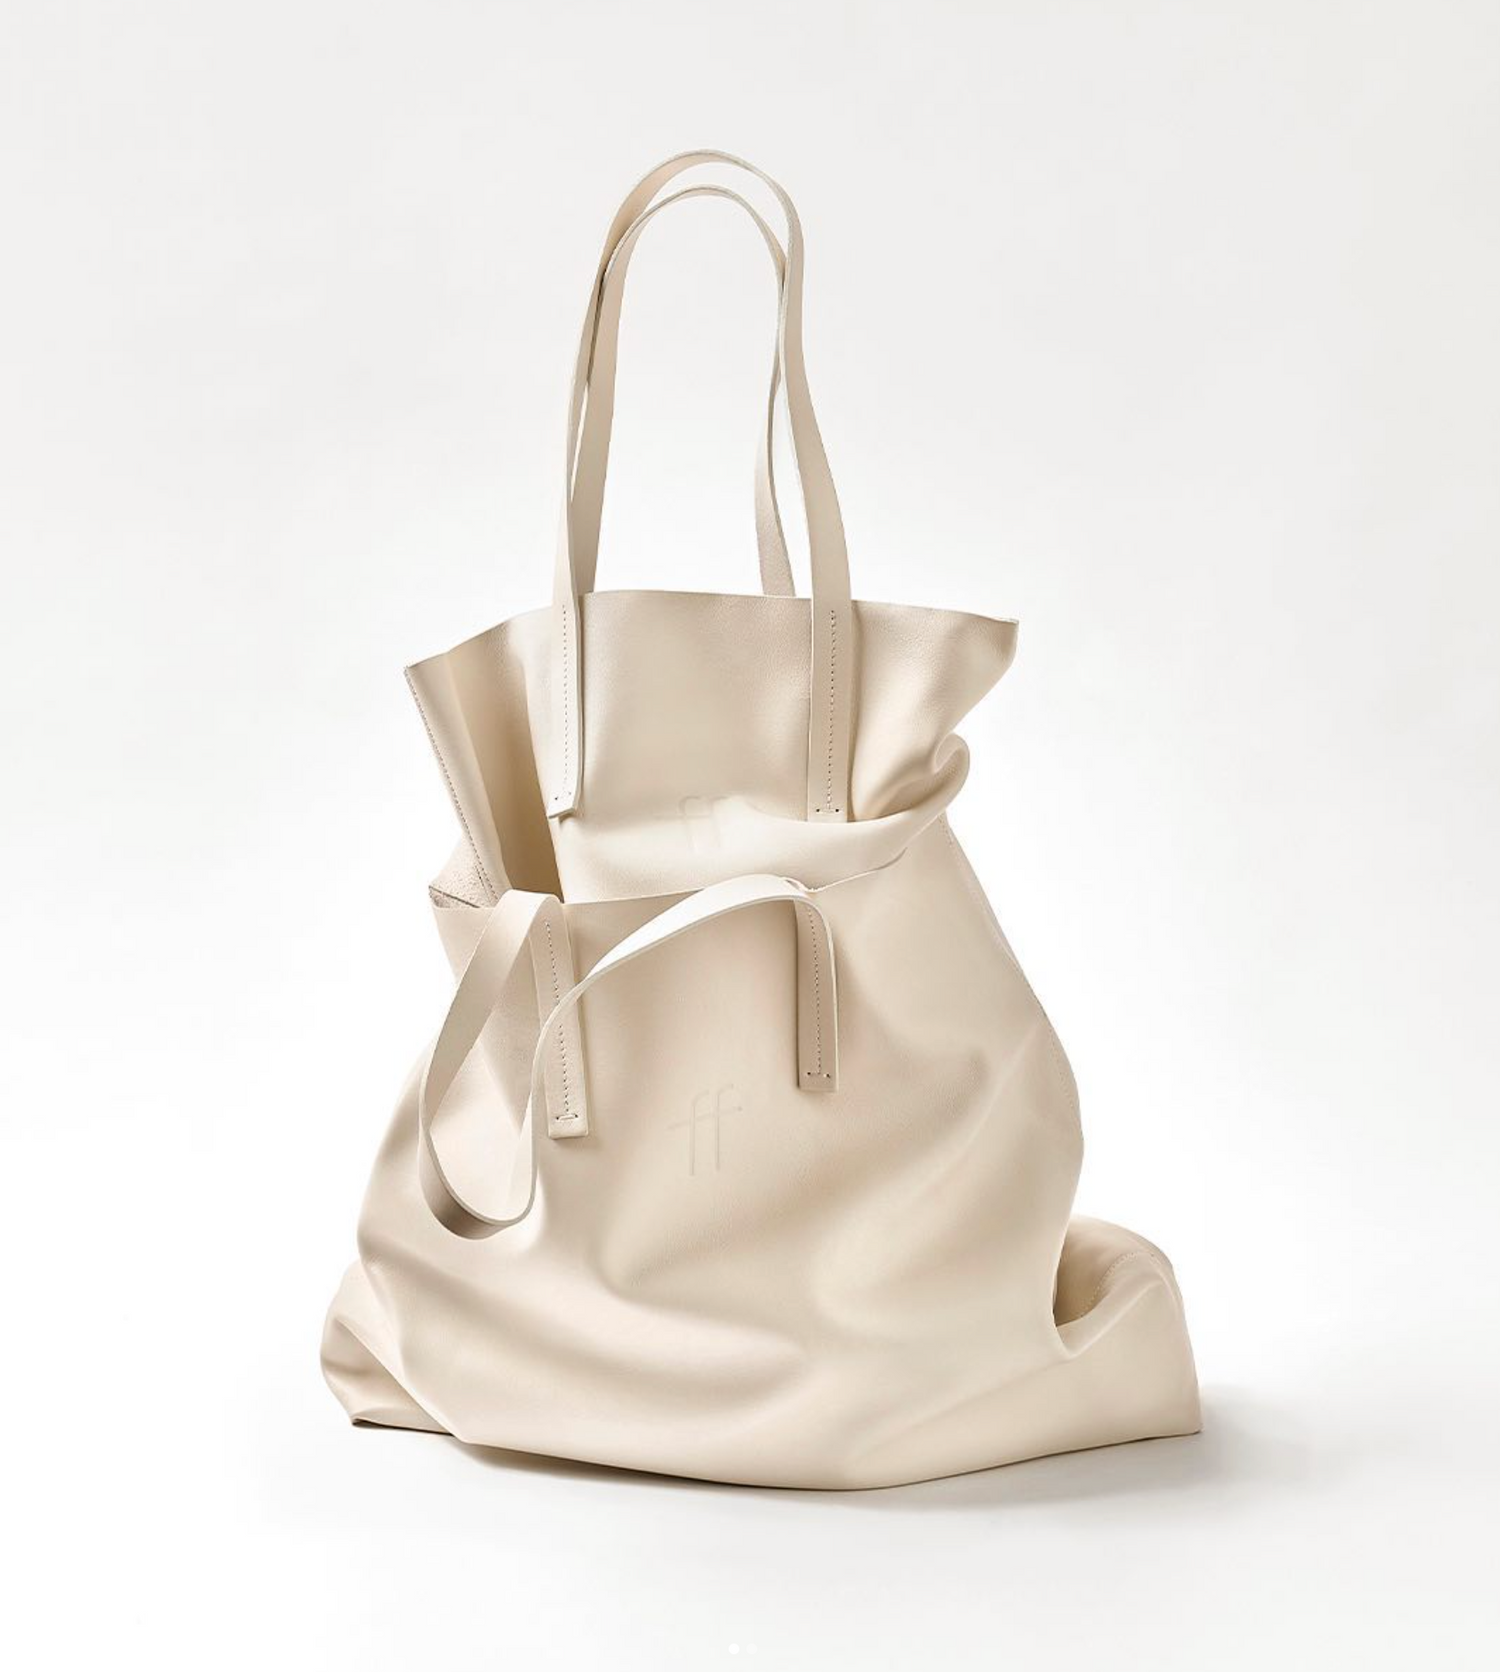 Maxi nappa leather shopping bag, ivory